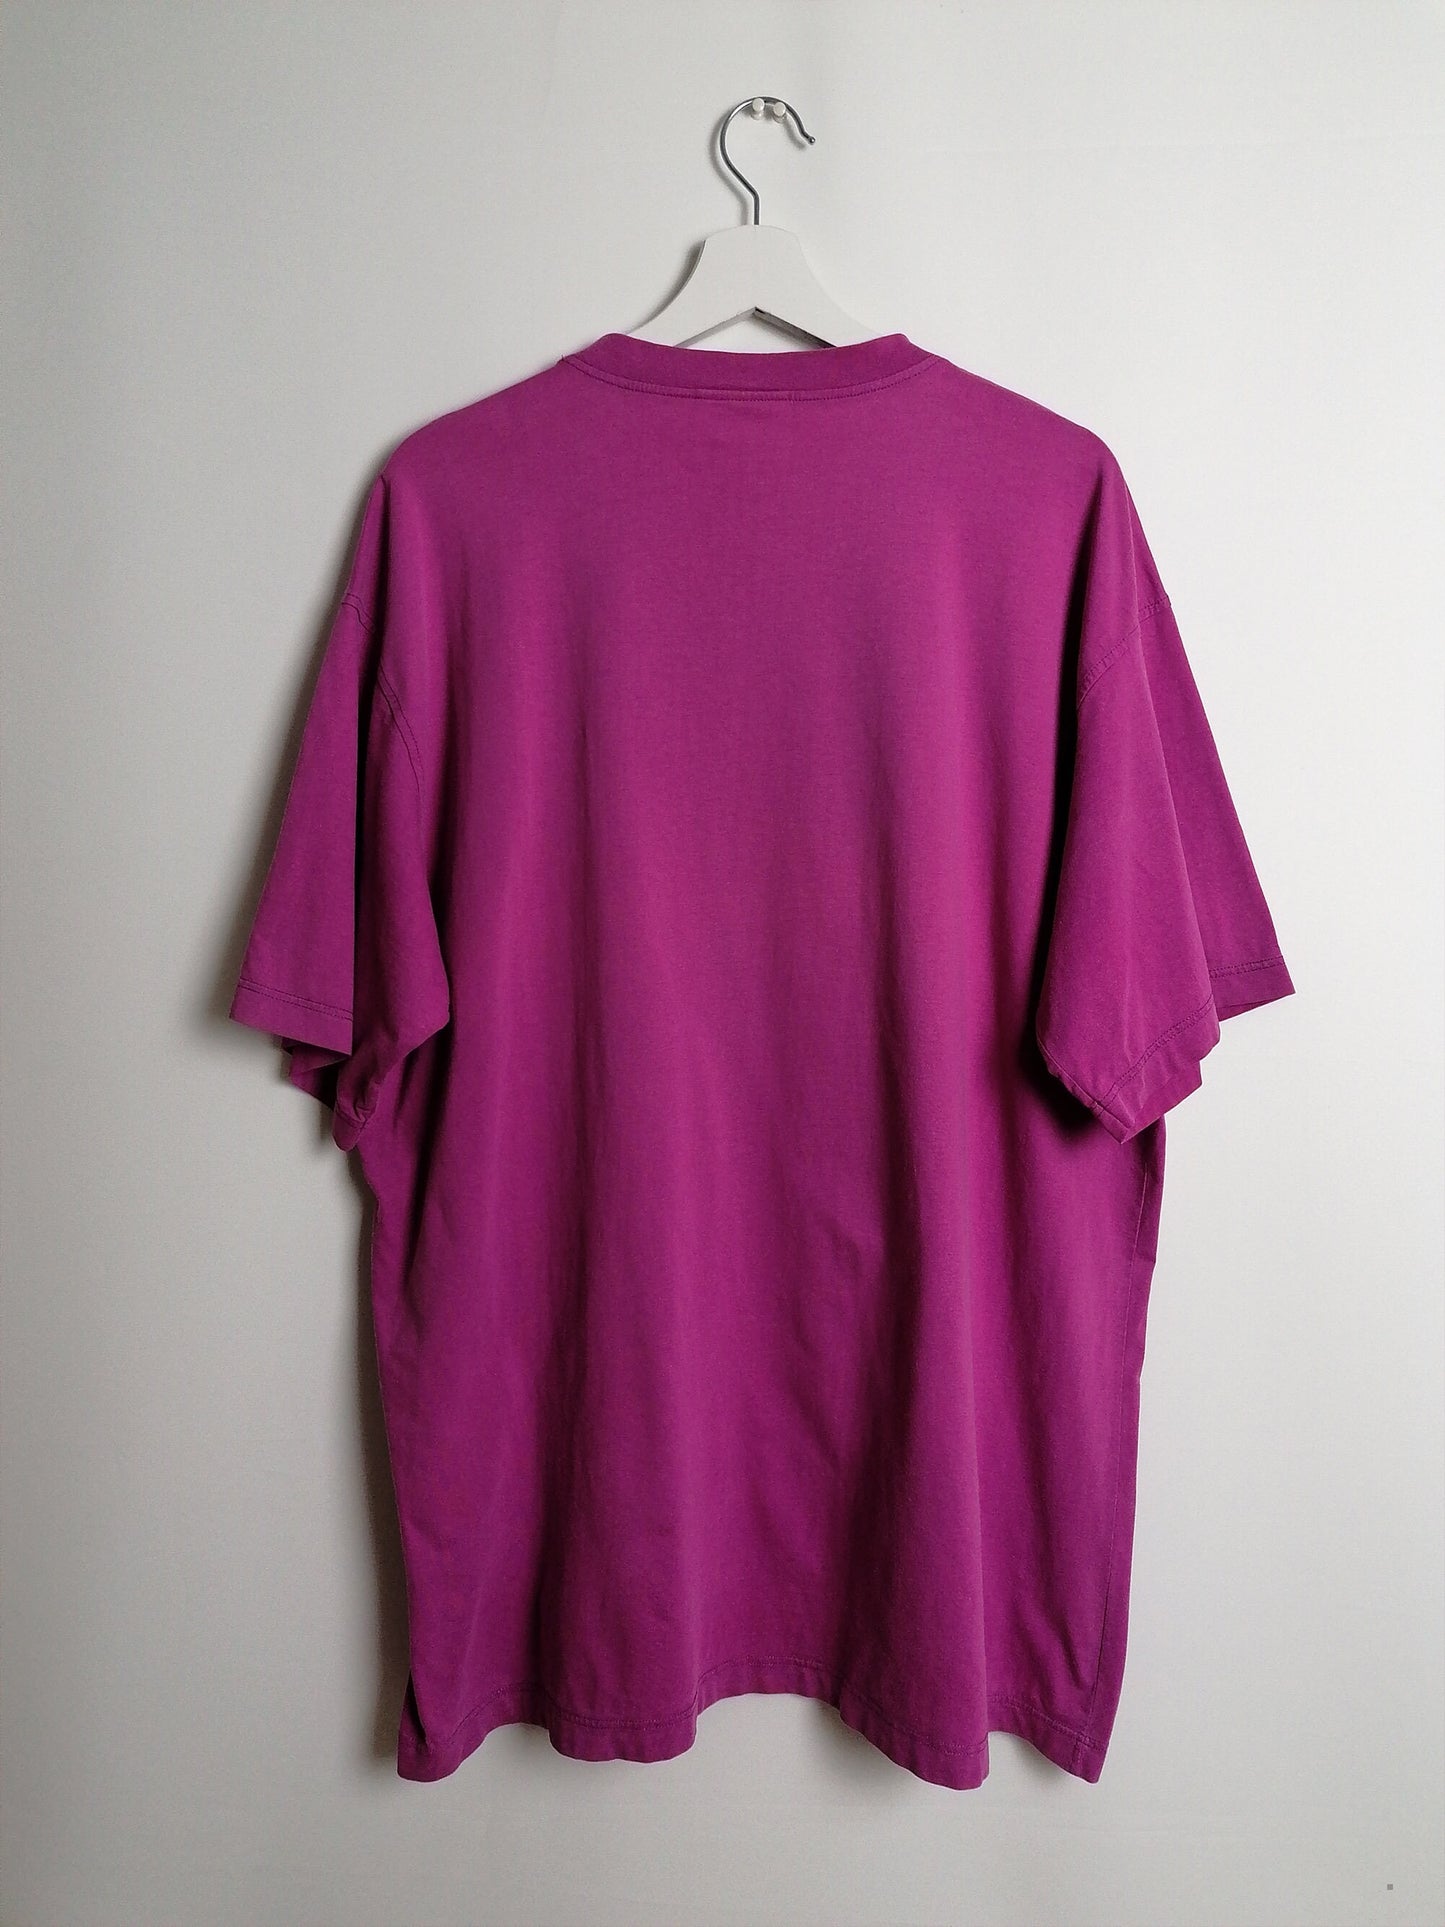 Vintage 90's ADIDAS Originals Unisex Oversized T-shirt - size XL